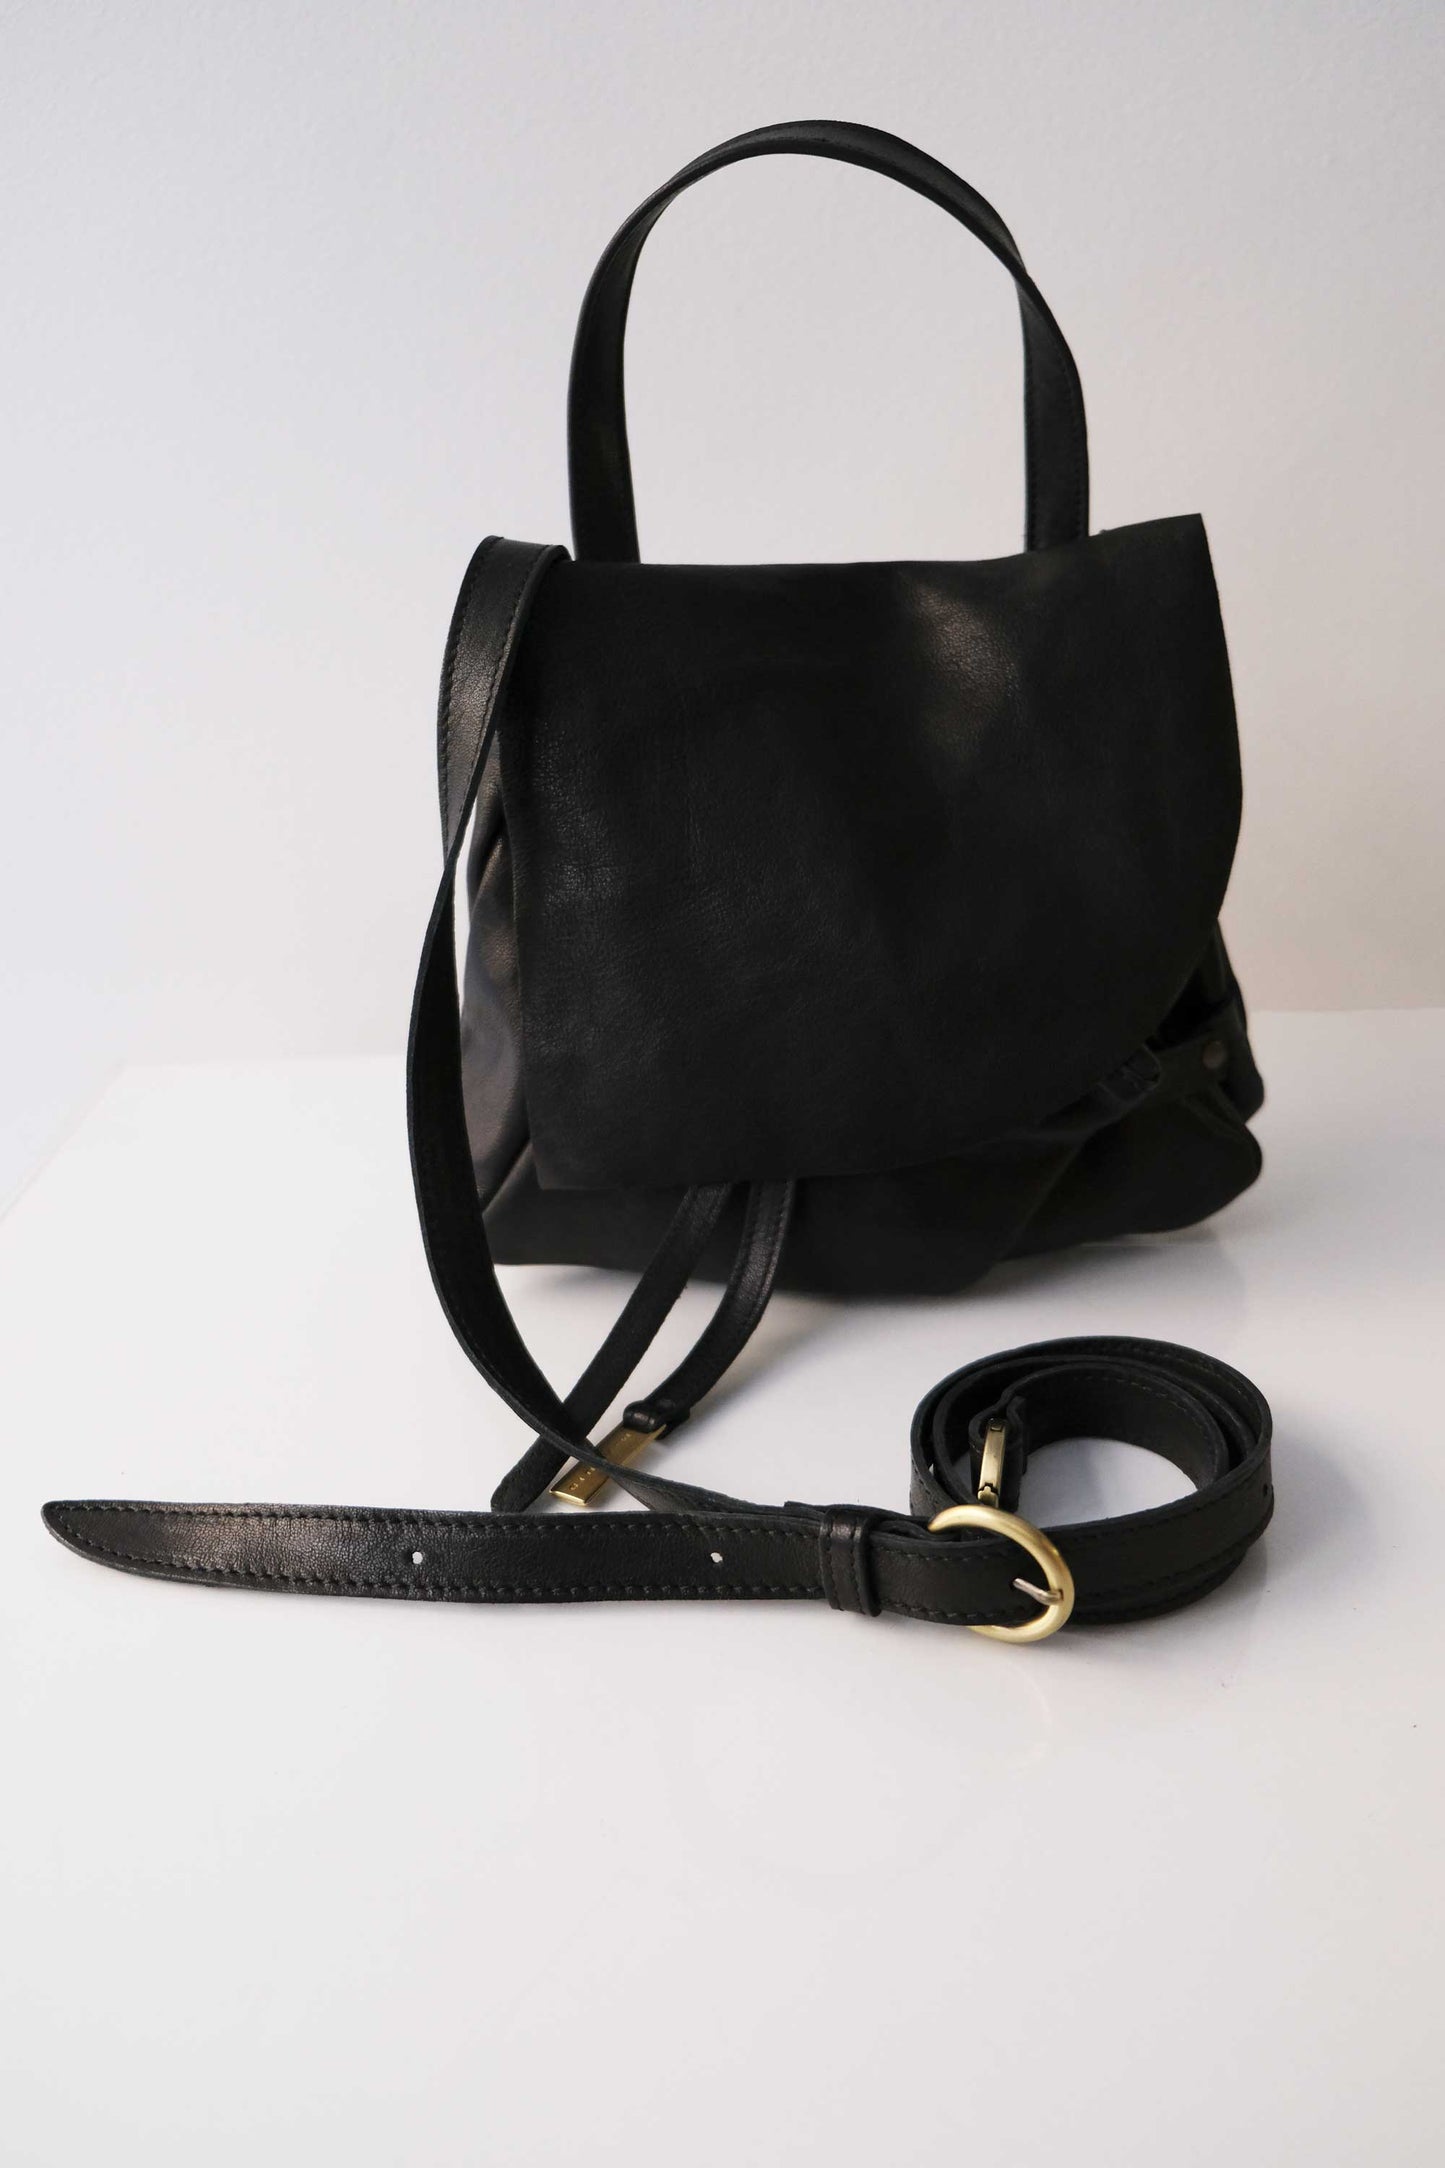 Minu in soft black nappa leather